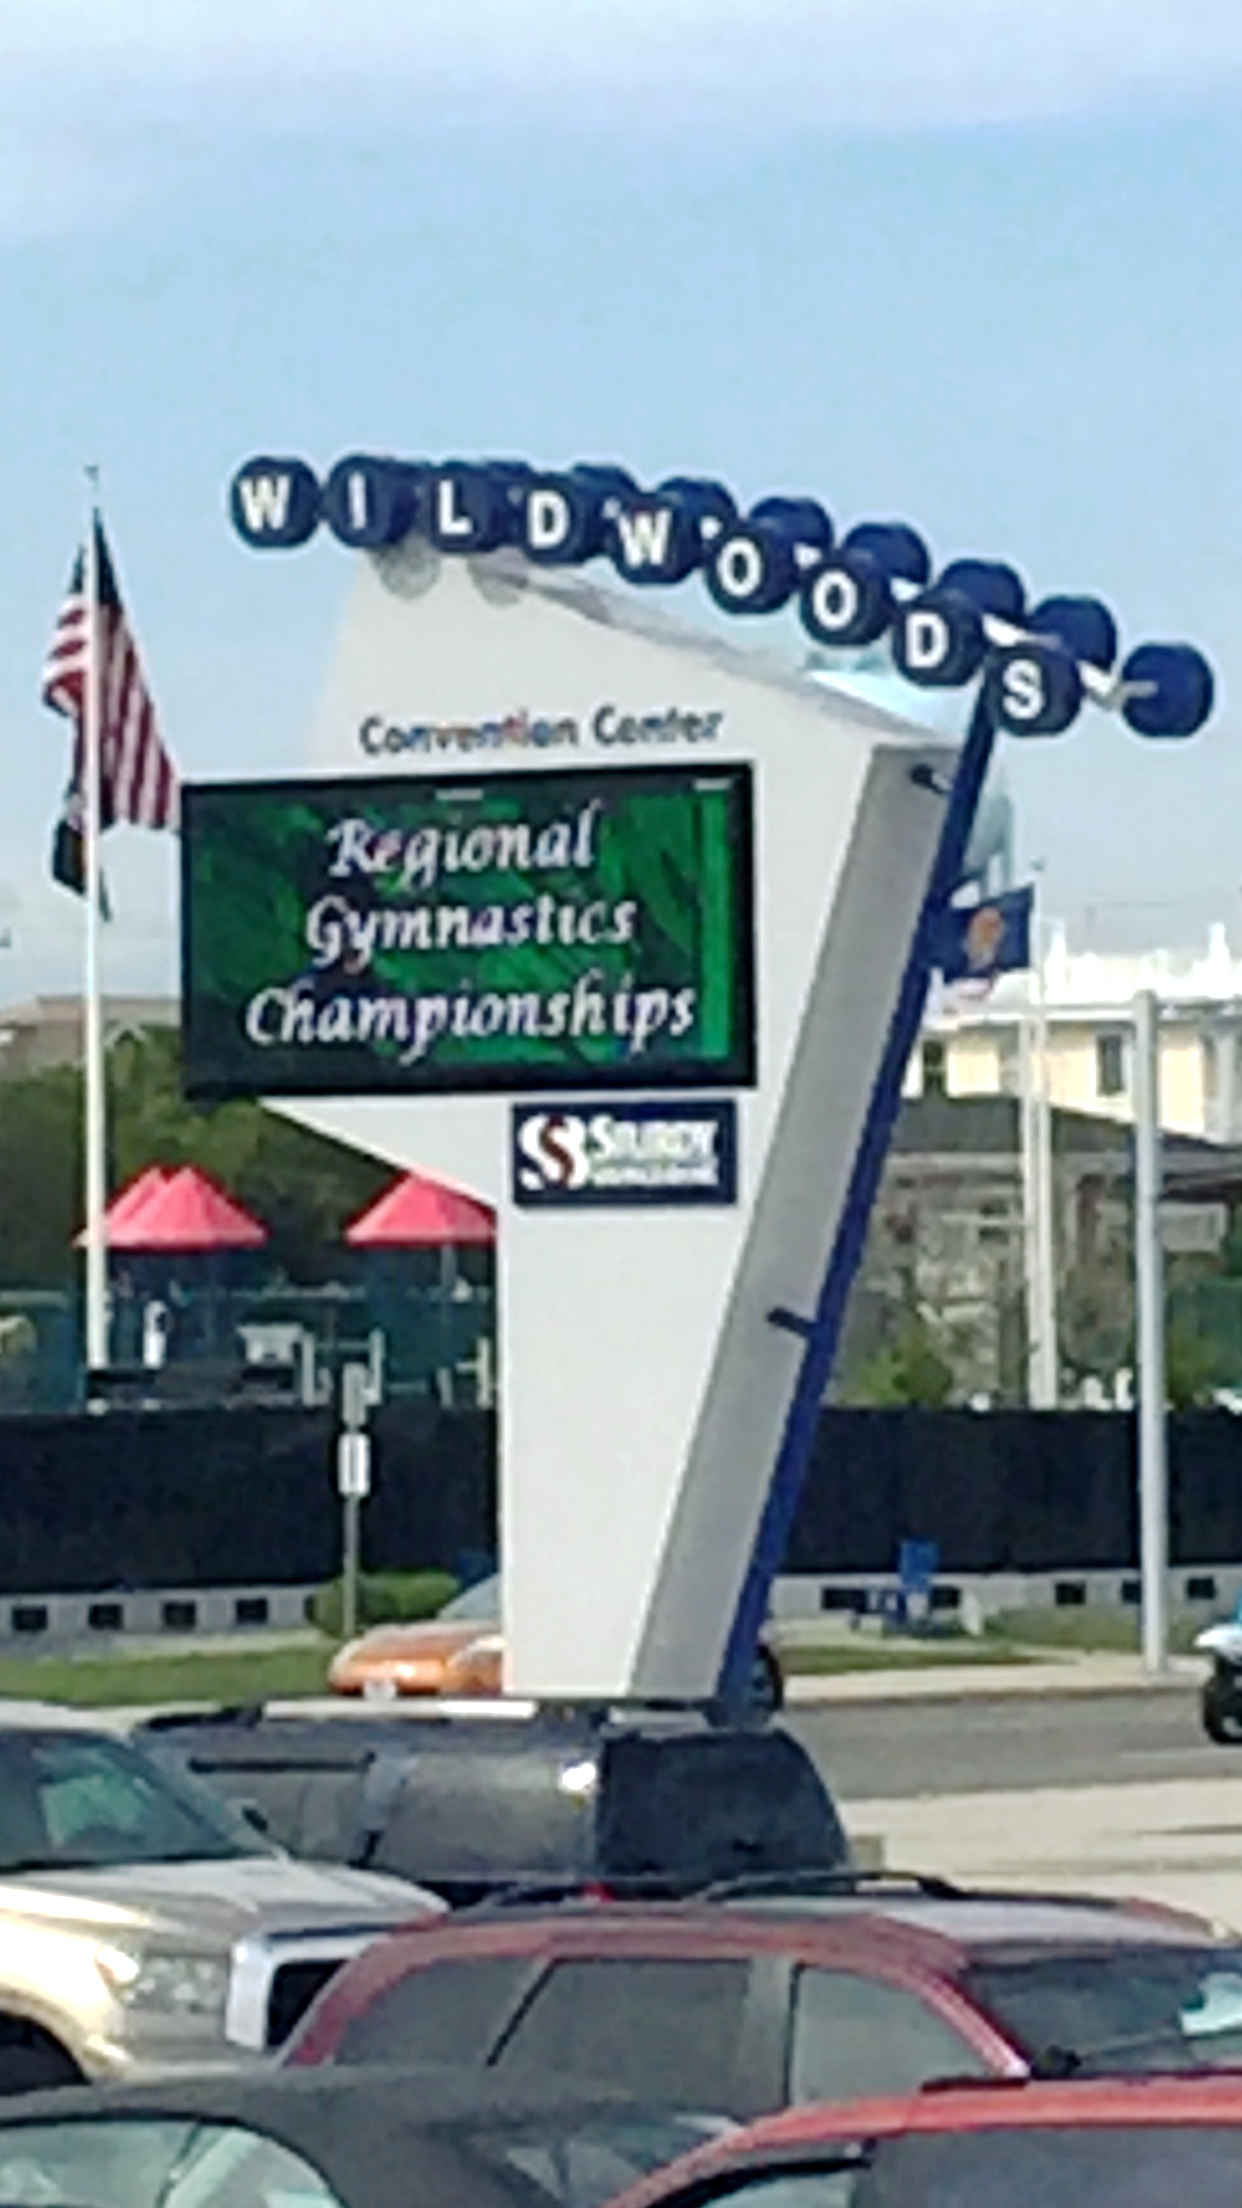 2017 usaigc nj state gymnastics championships come to 